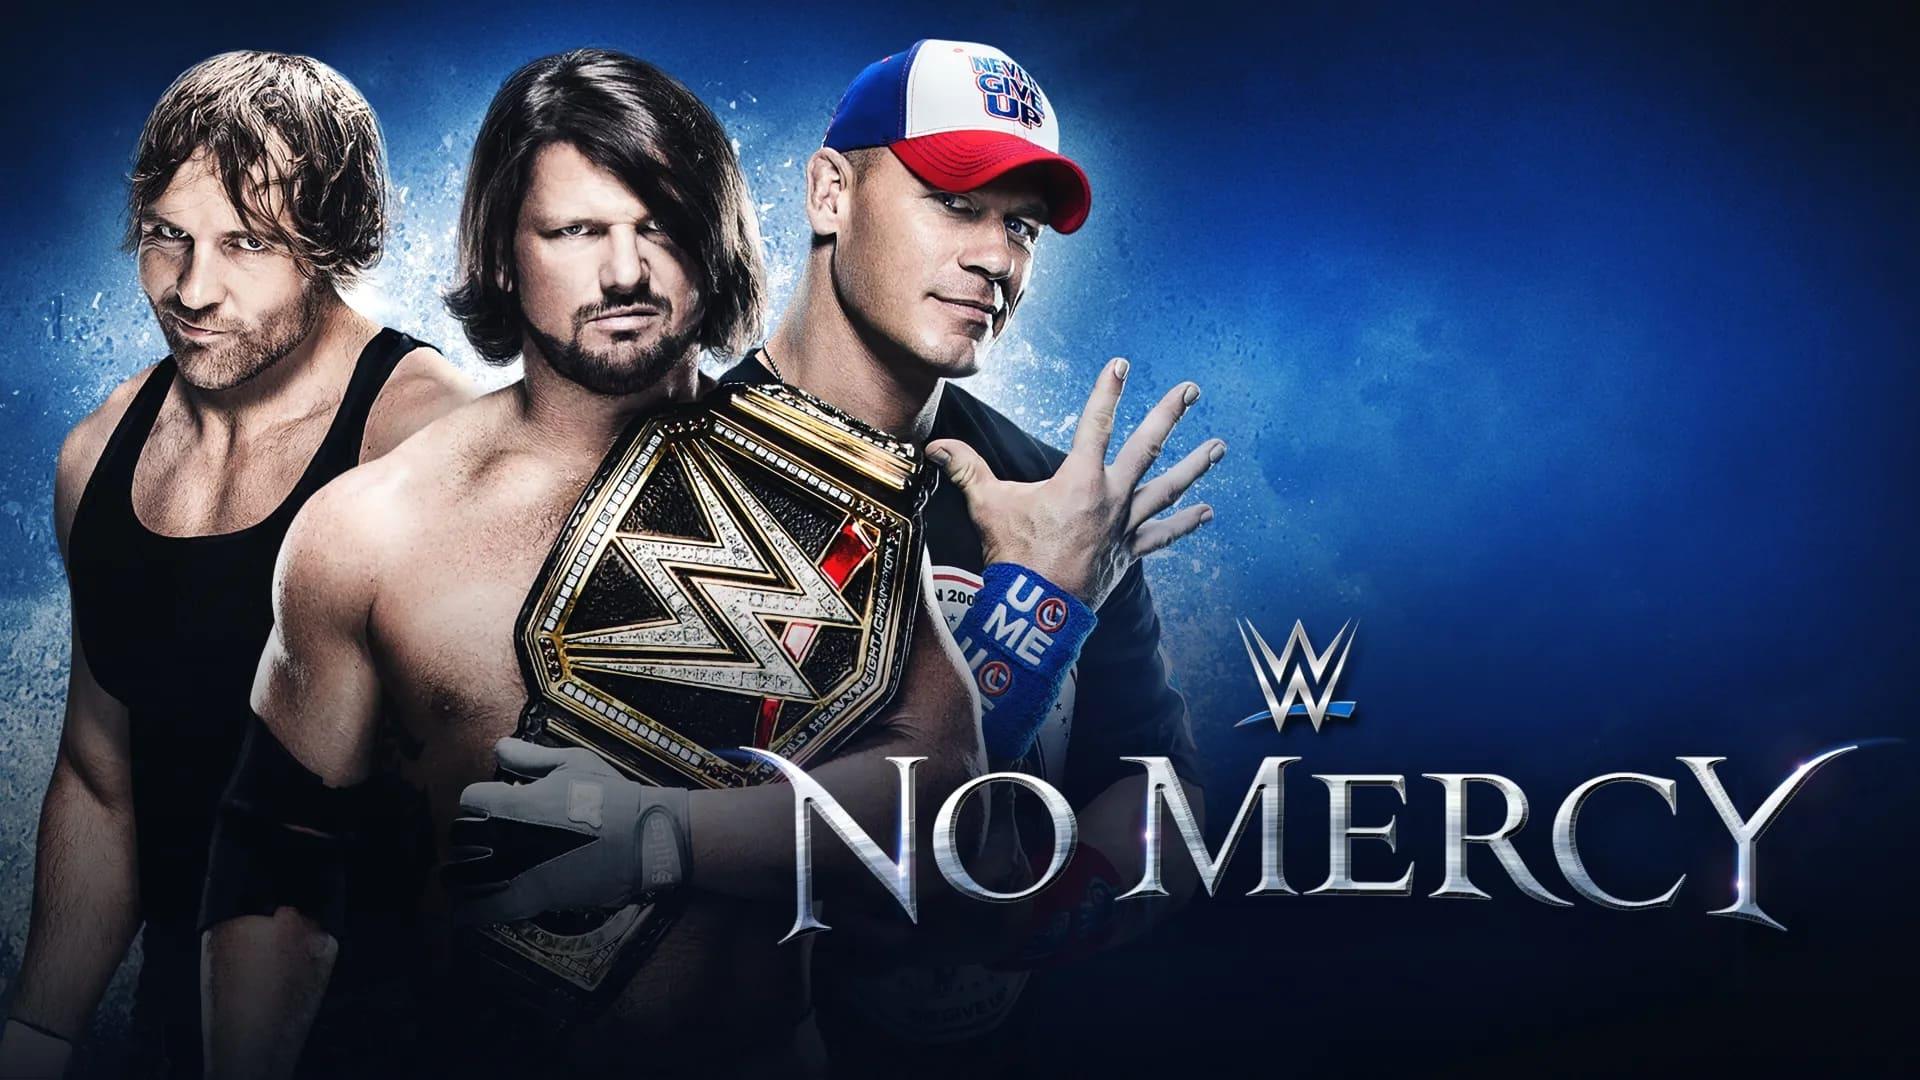 WWE No Mercy 2016 backdrop